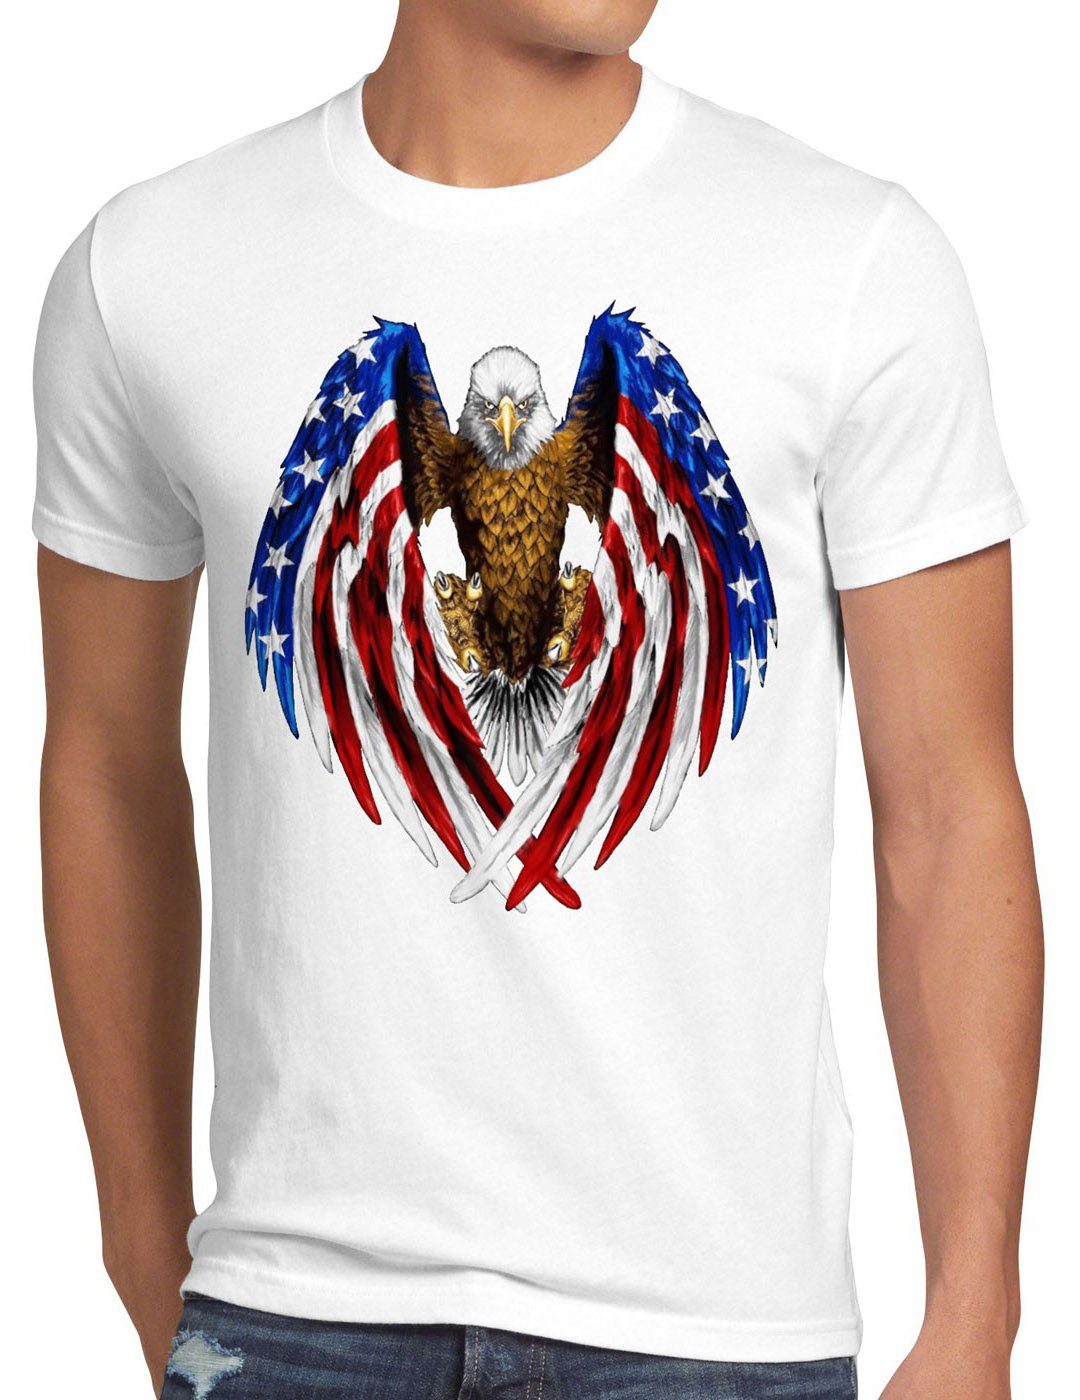 states stars juli stripes usa adler and america weiß style3 Print-Shirt flagge Herren T-Shirt of unites 4. US